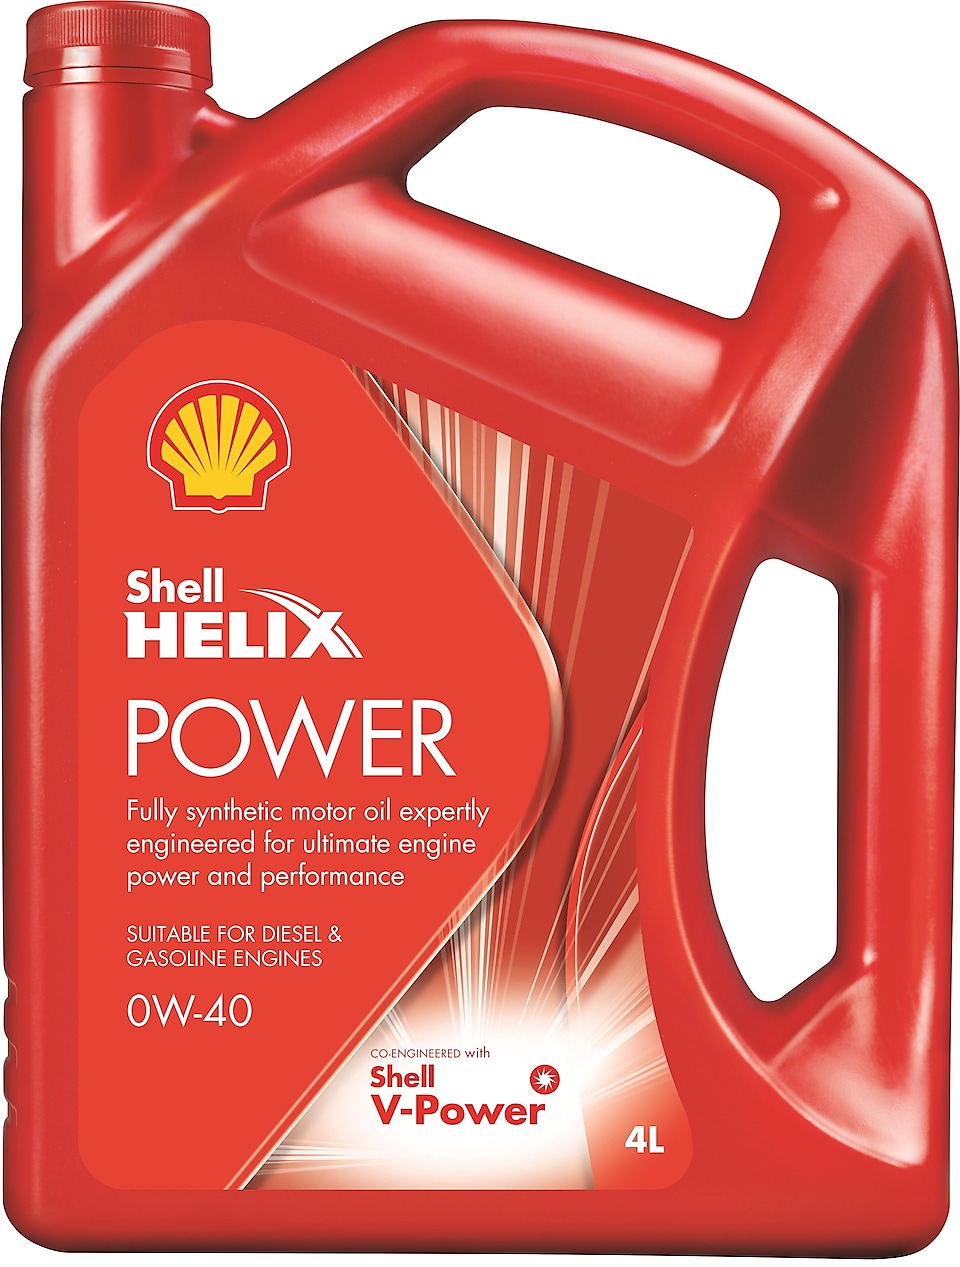 Shell Helix Ultra product packshort